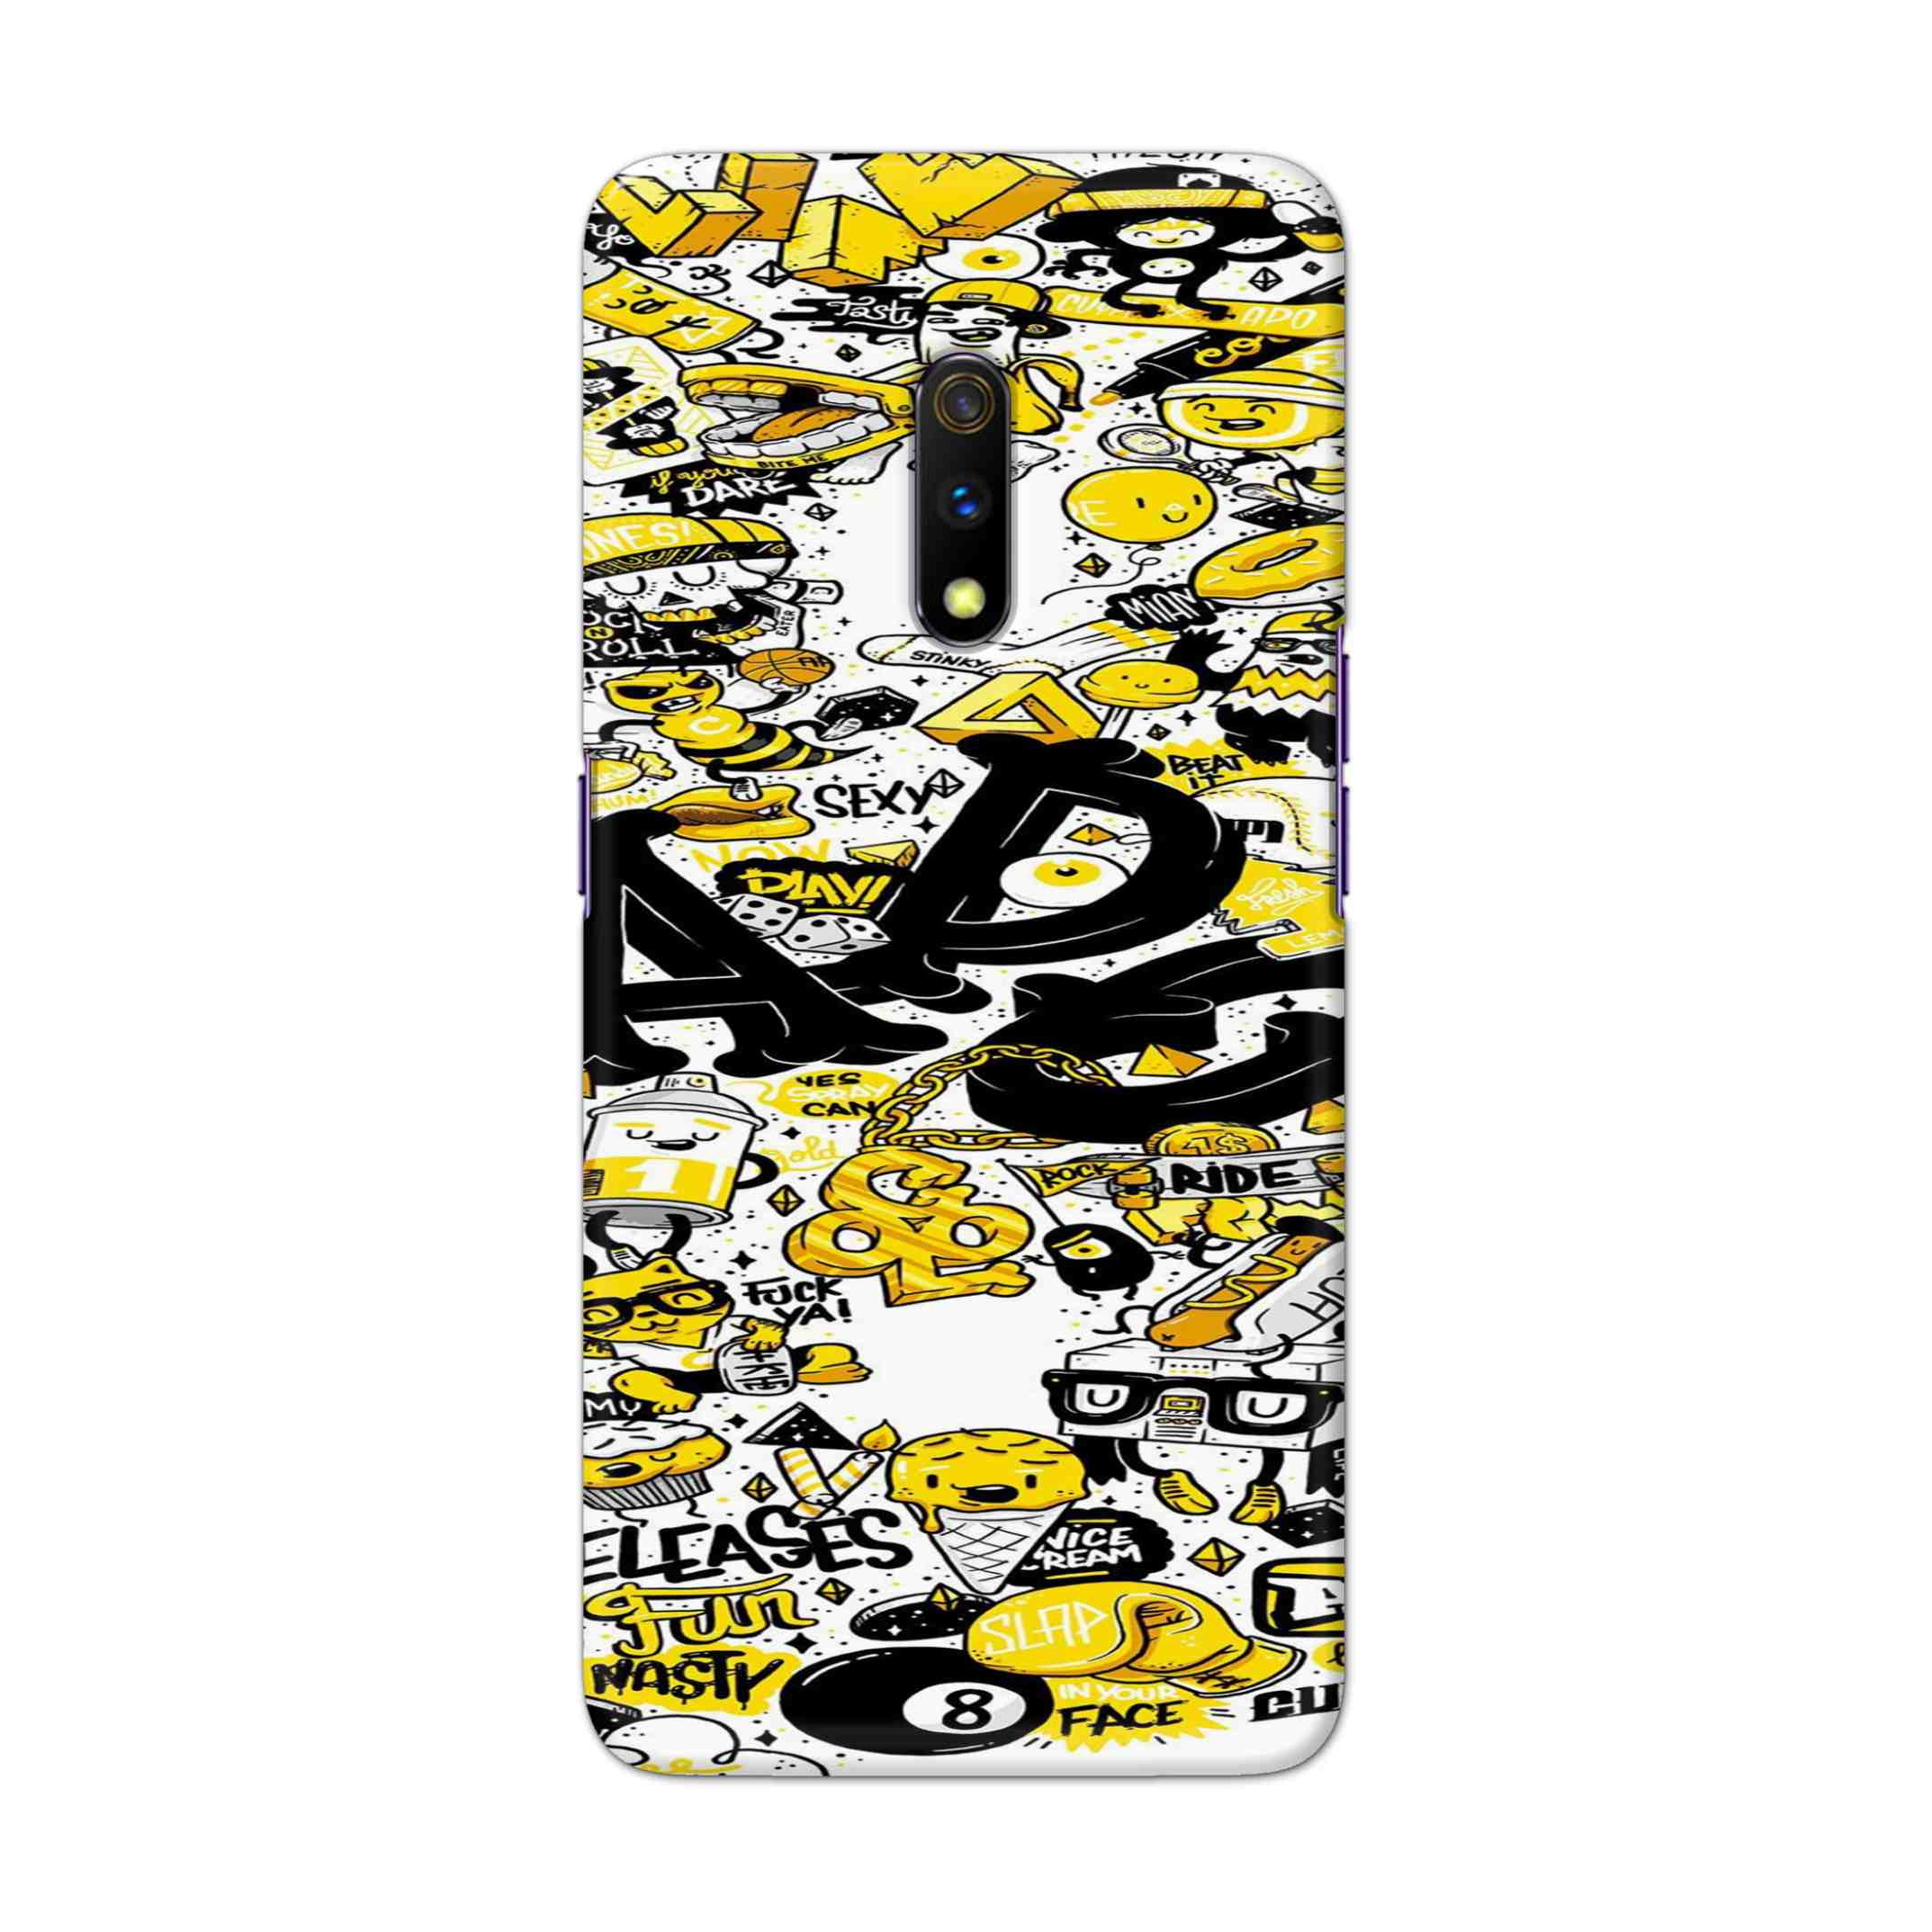 Buy Ado Hard Back Mobile Phone Case Cover For Oppo Realme X Online